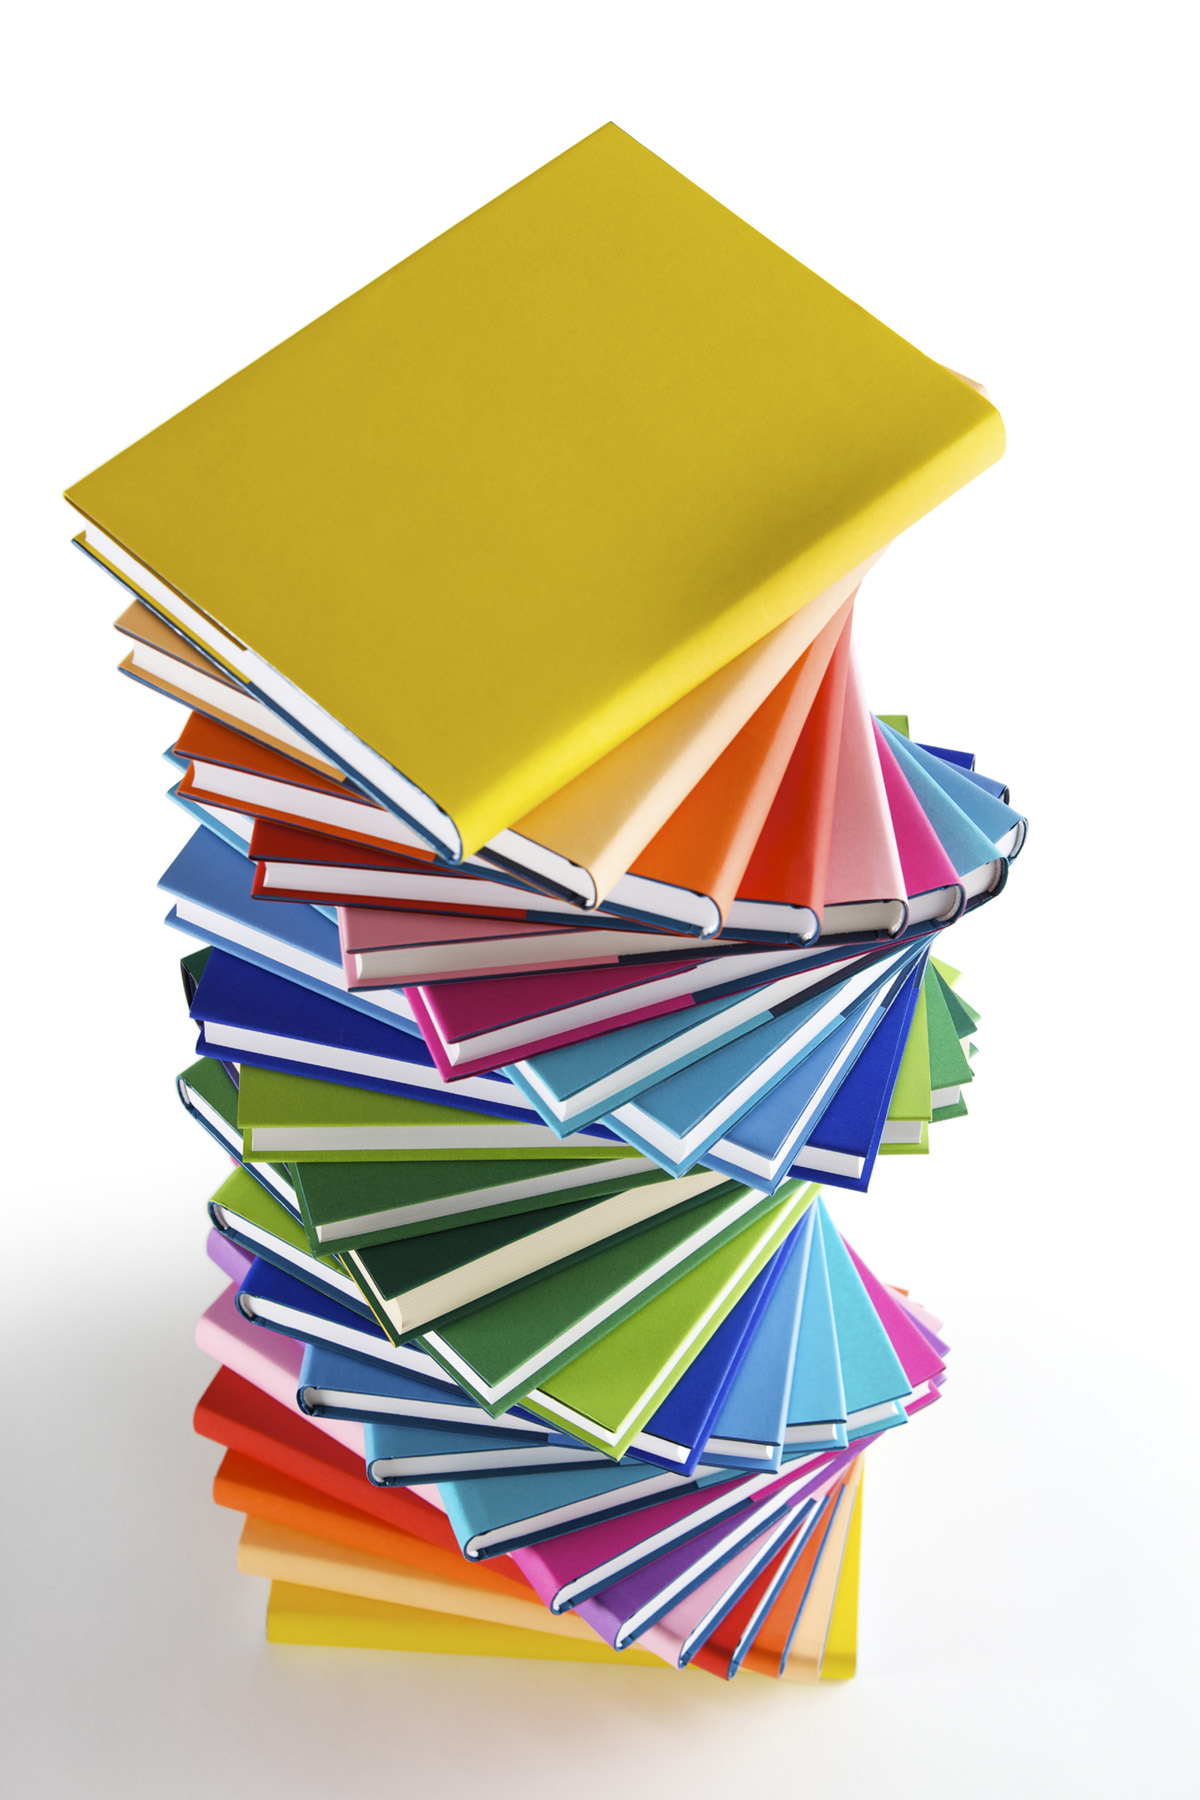 Color Books - Adobe Indesign Certification , HD Wallpaper & Backgrounds